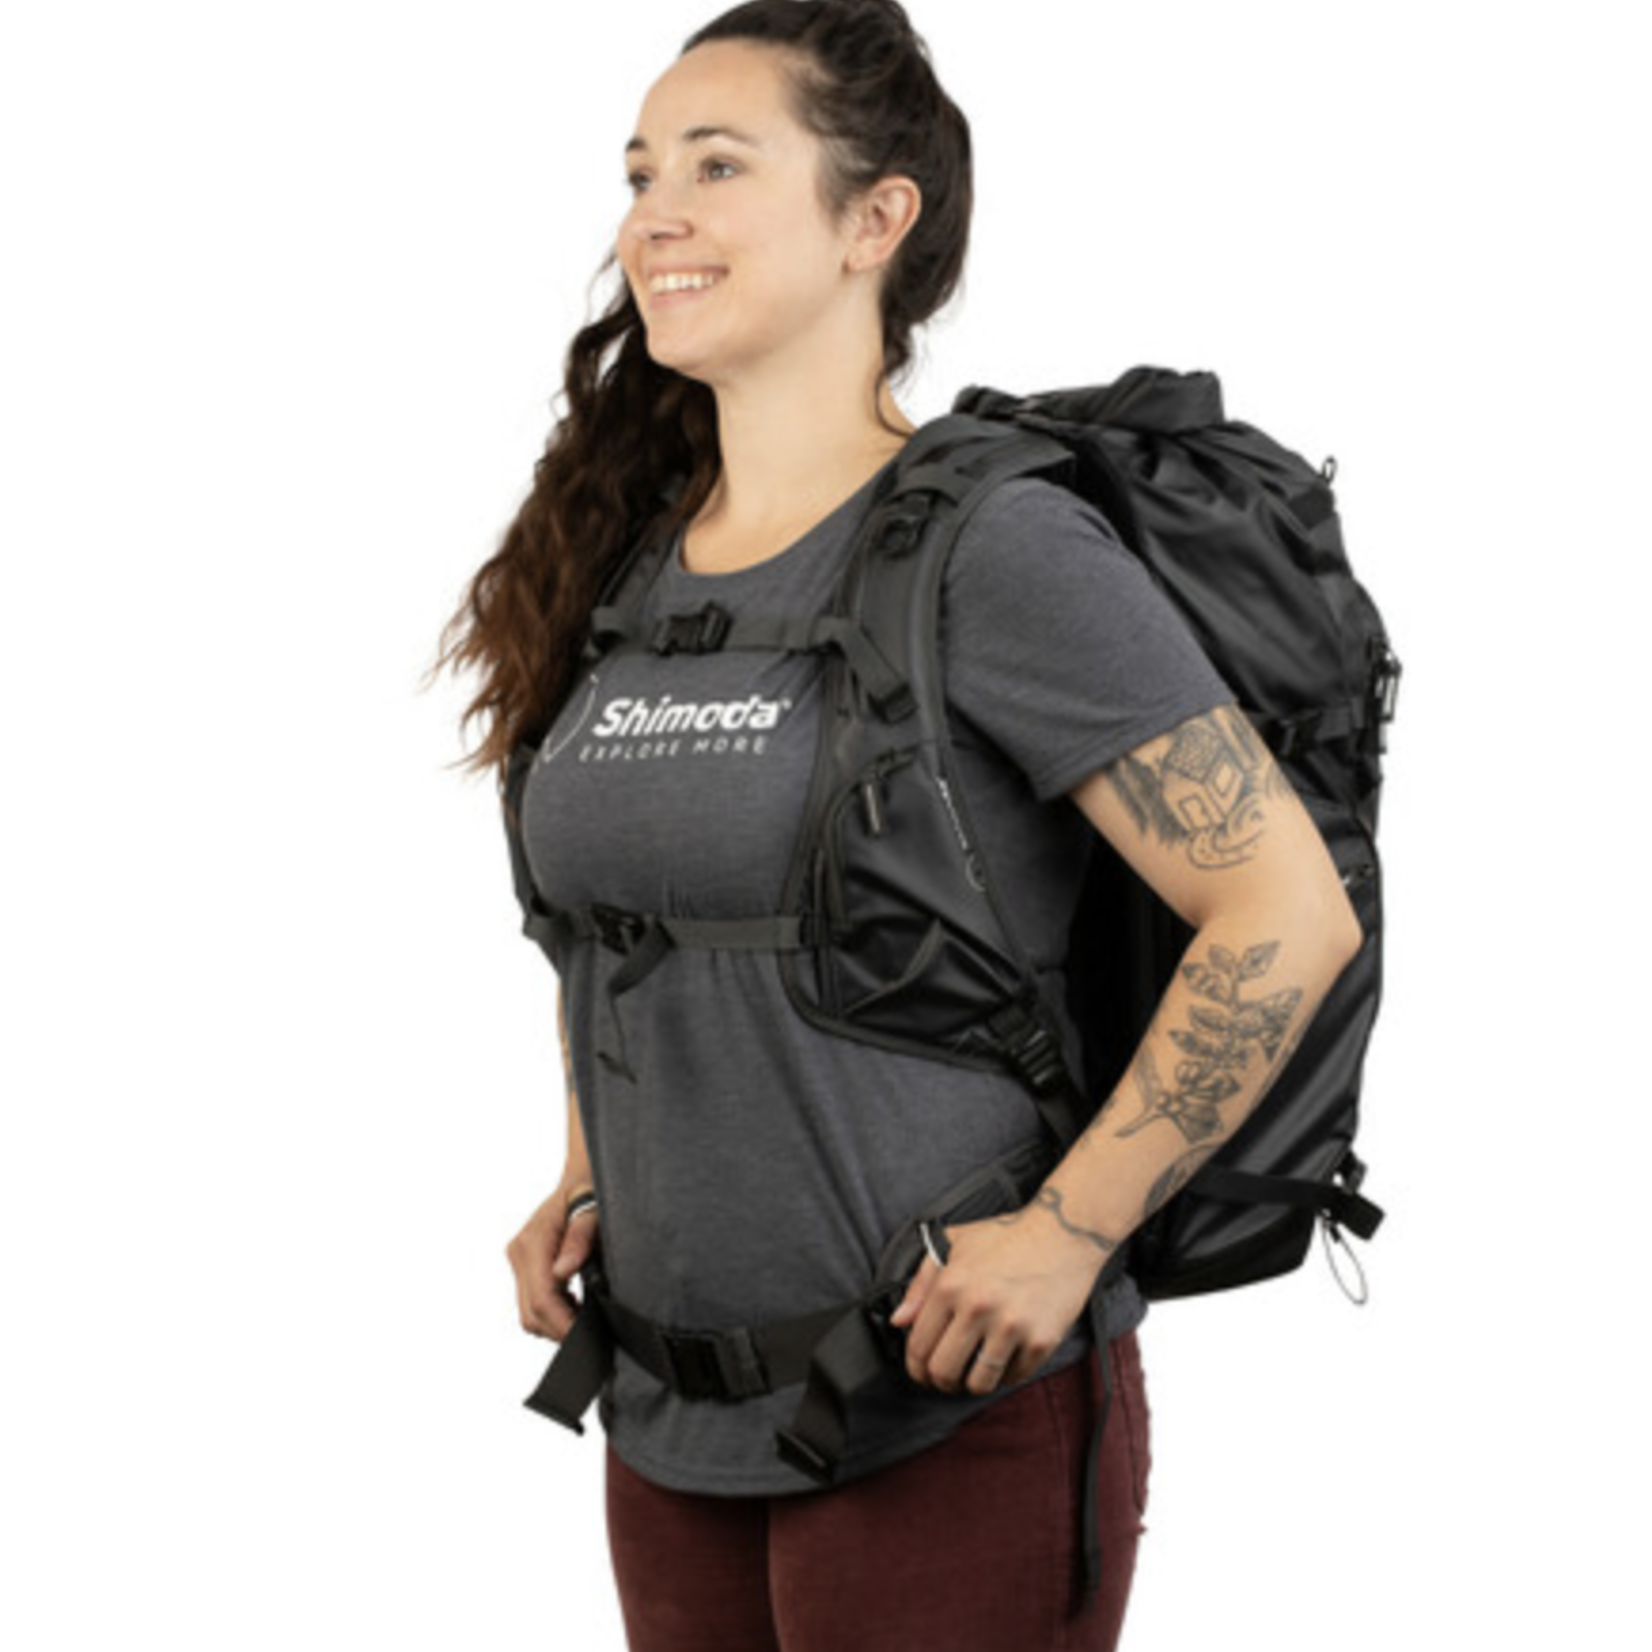 Shimoda Shimoda Designs Women's Tech Backpack Straps (Black)